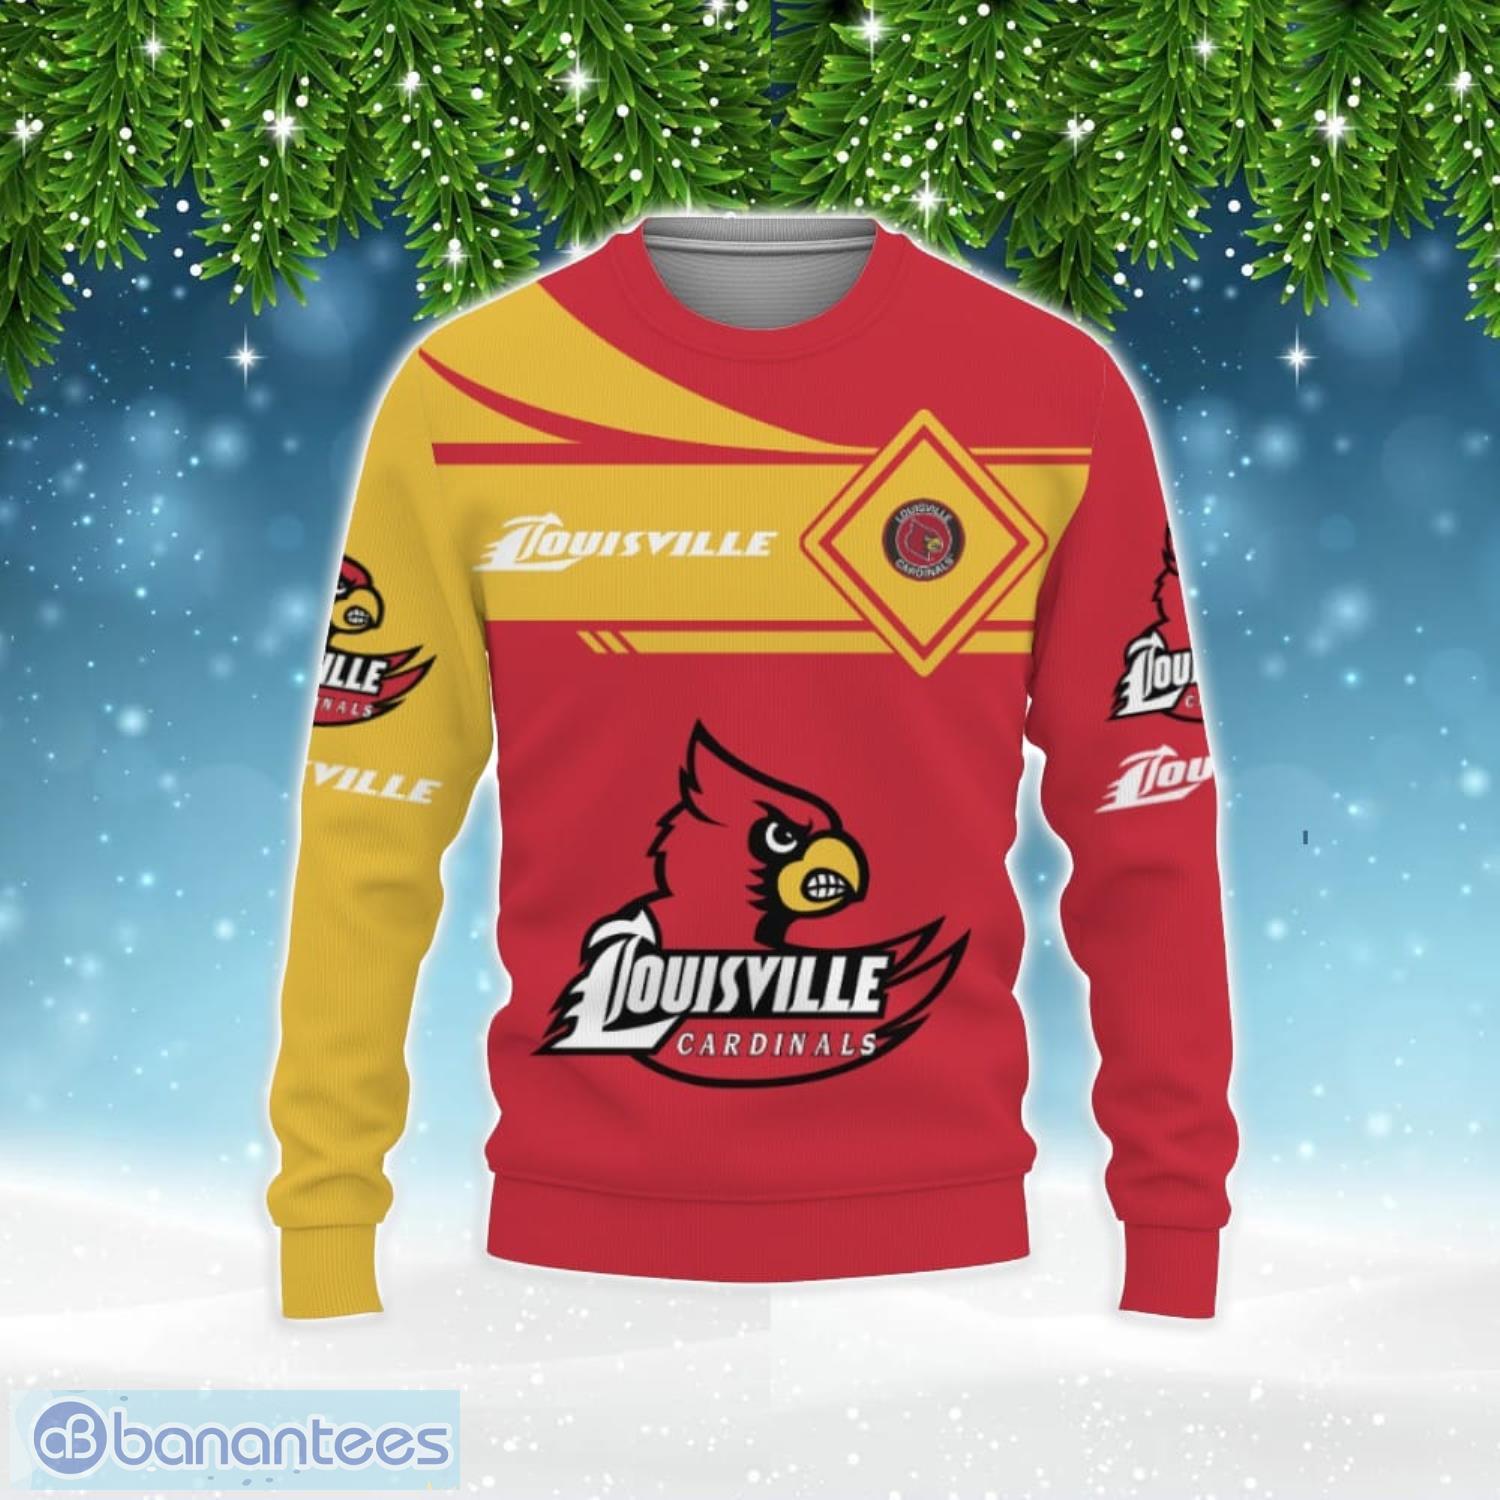 louisville cardinals sweater